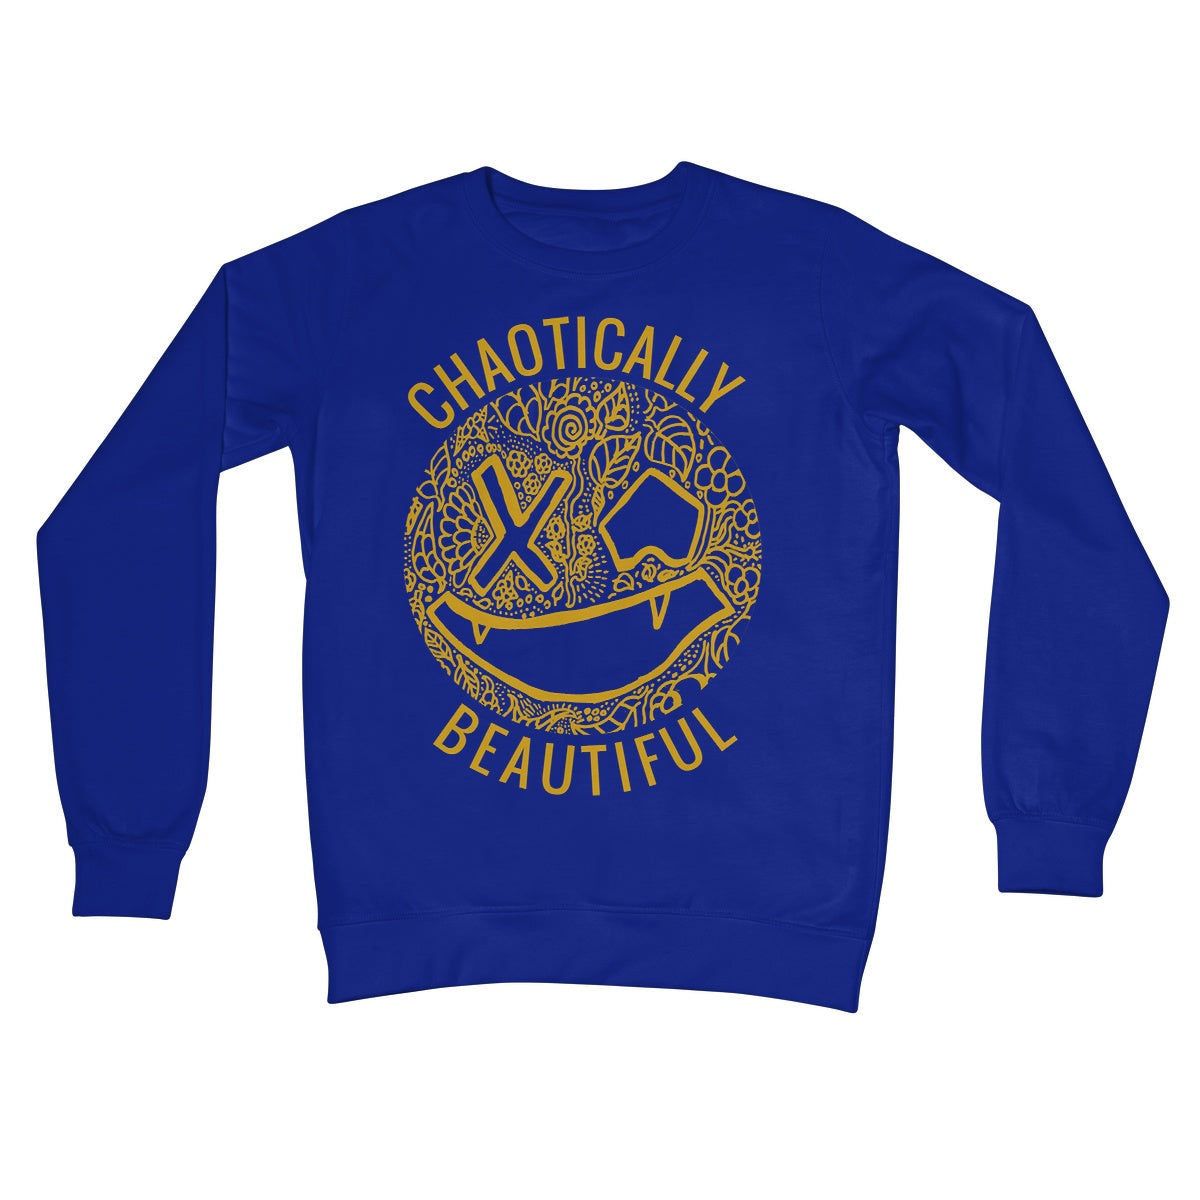 Crew Neck Sweatshirt - Chaotically Beautiful